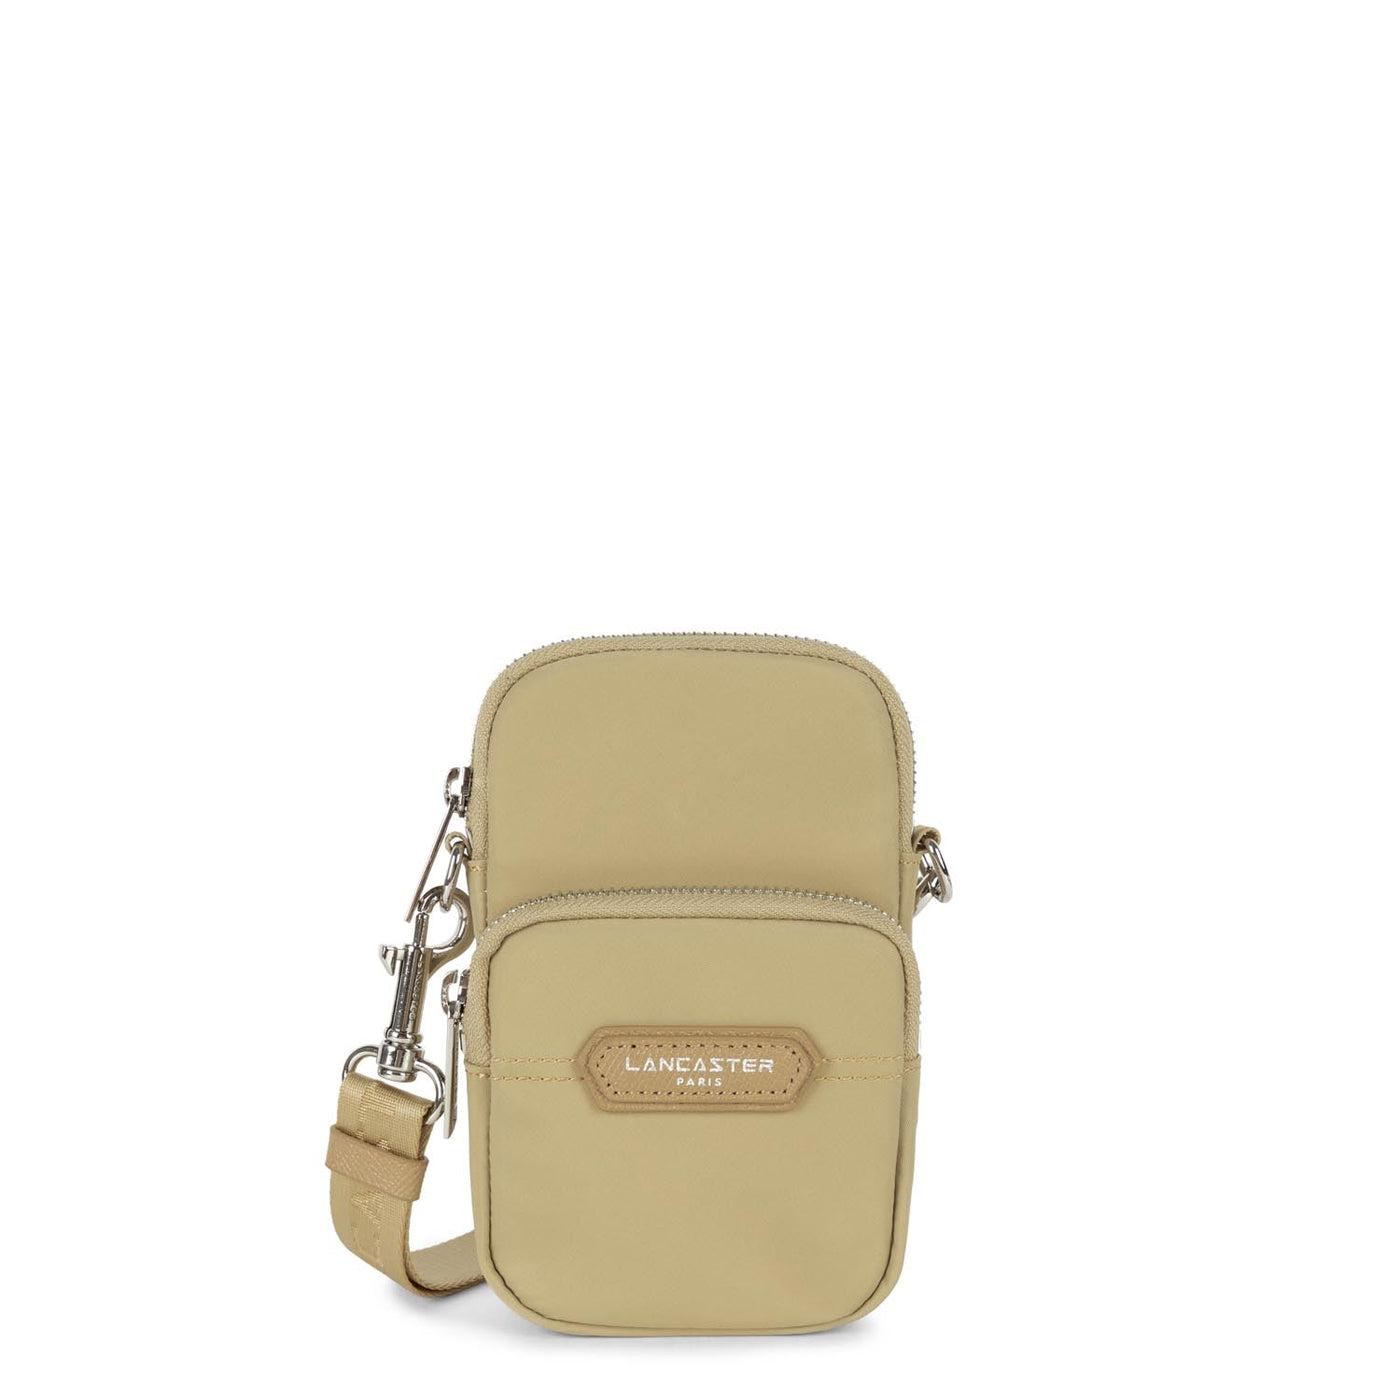 mini reporter bag - basic premium #couleur_naturel